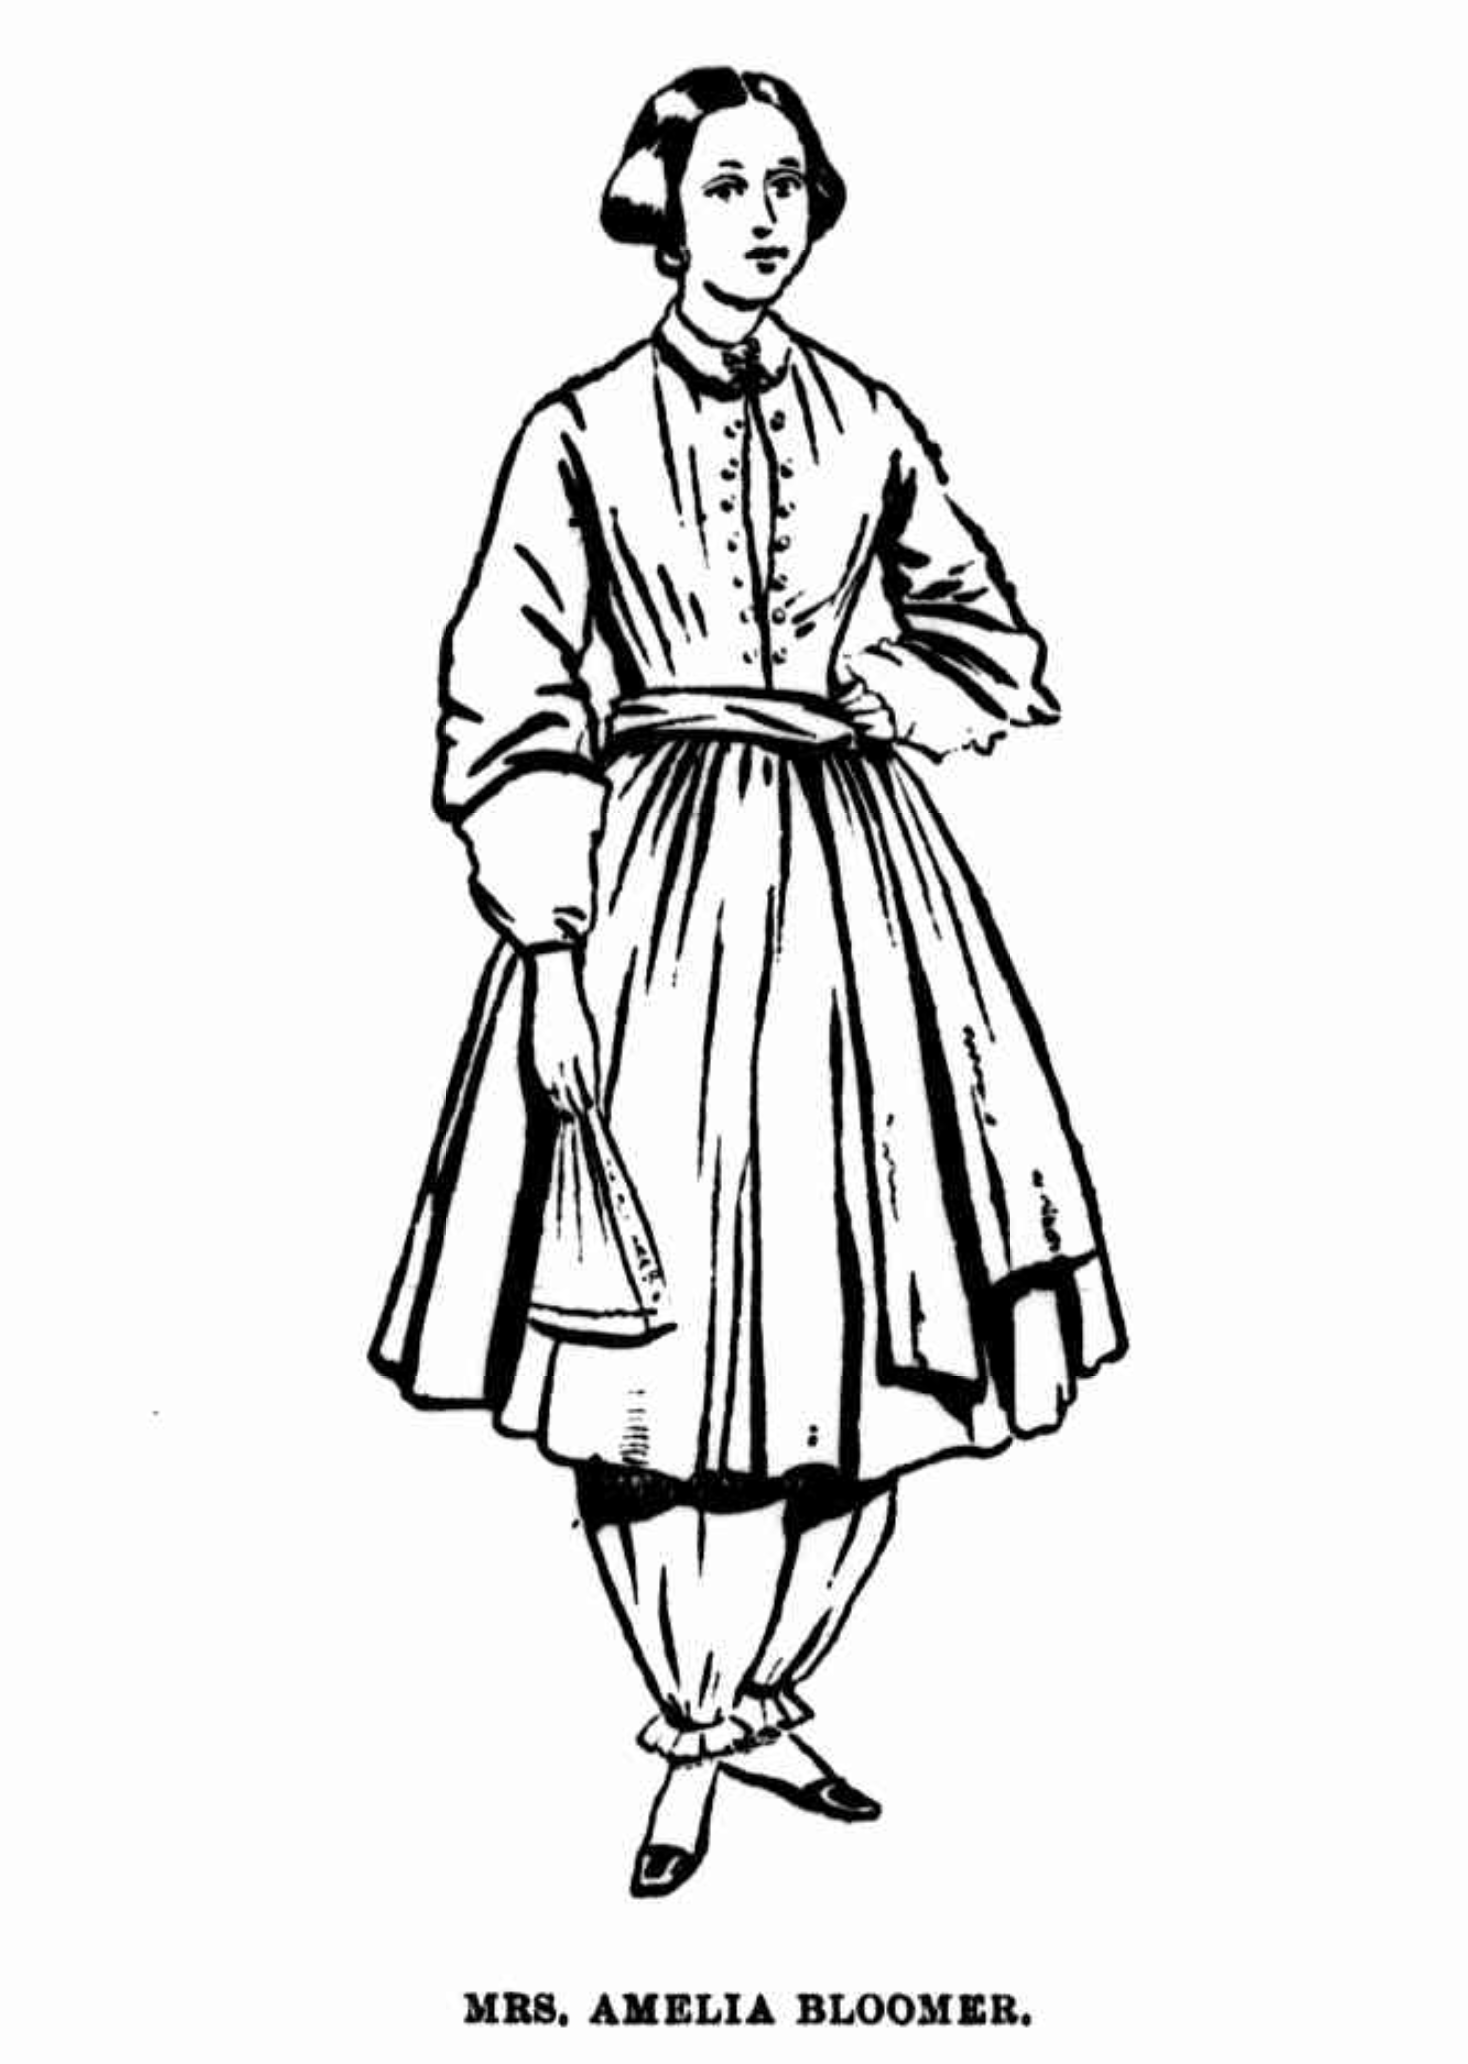 Illustration of Mrs Amelia Bloomer wearing the Bloomer costume